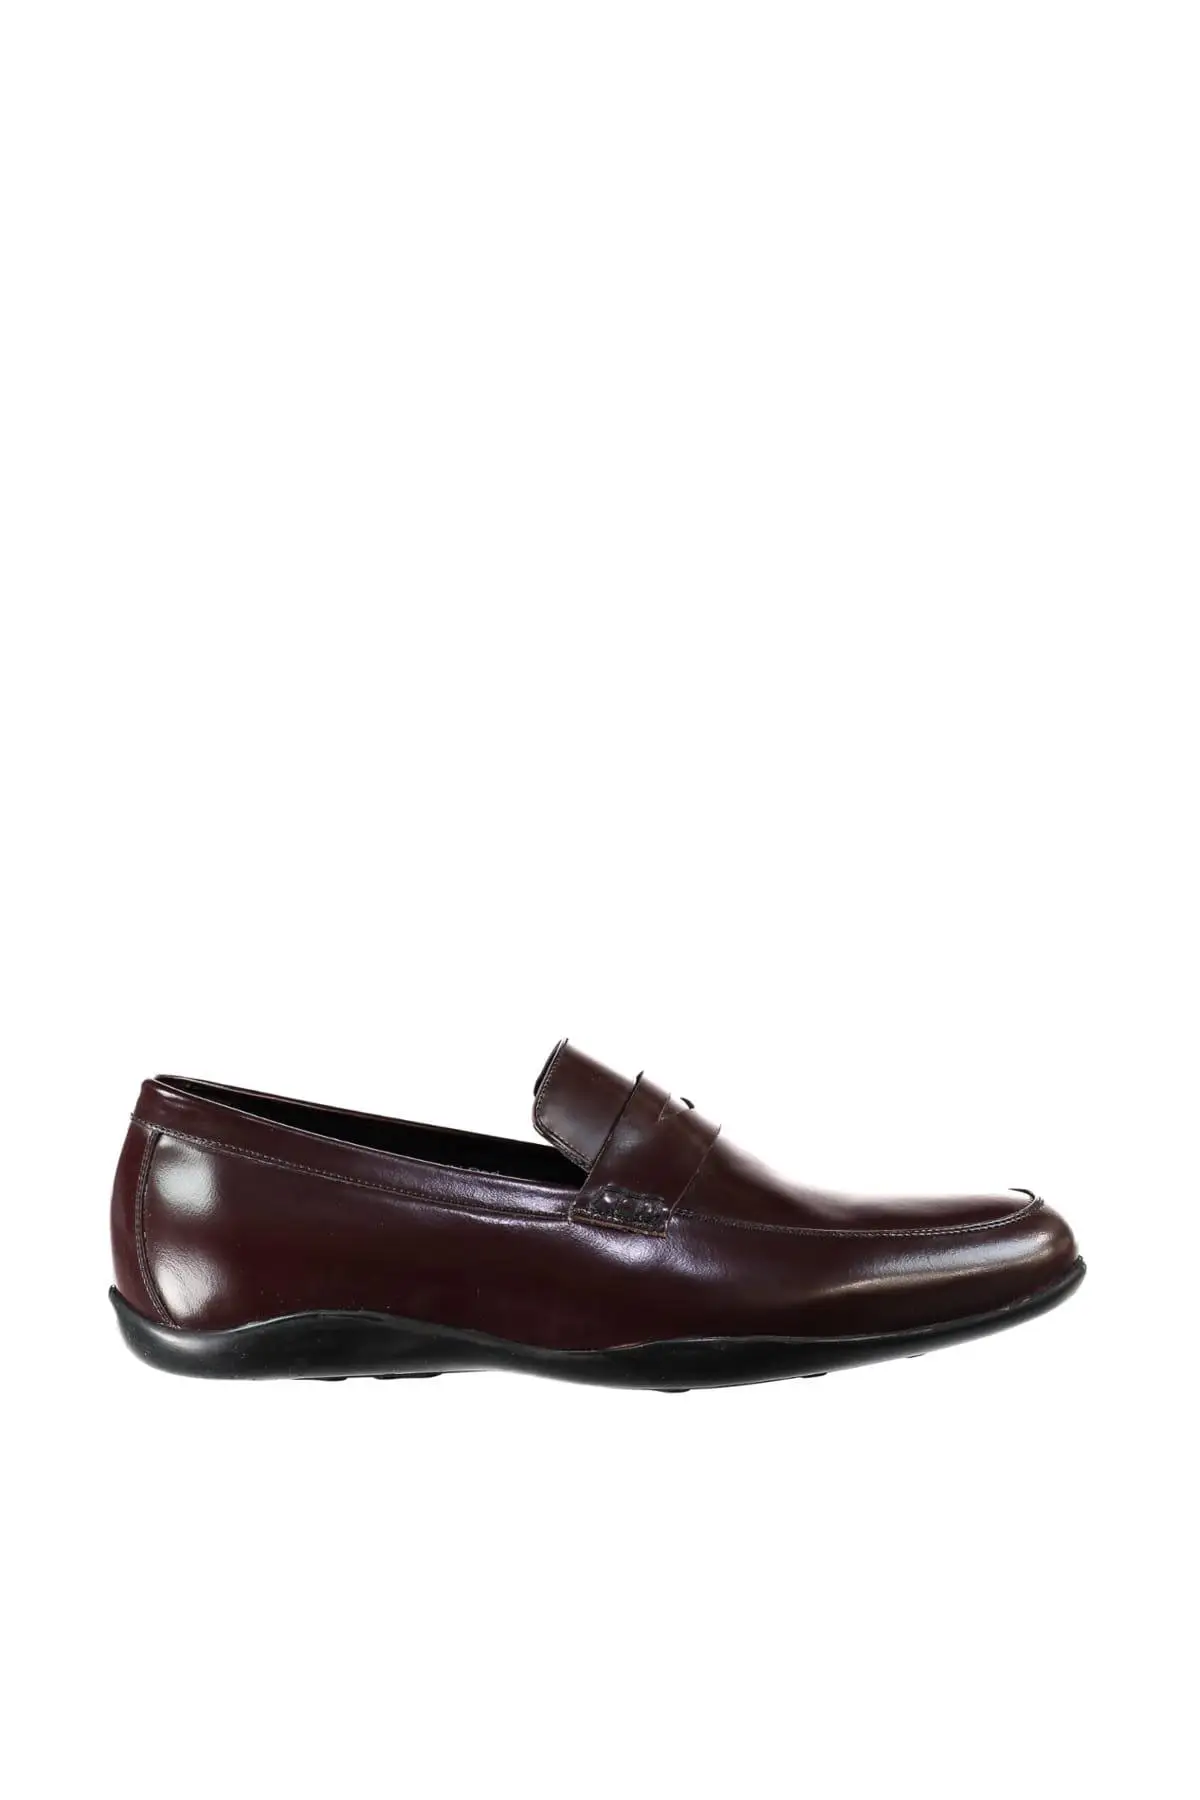 Pearl Burgundy Men 'S Classic Shoes 120130005577 | Обувь